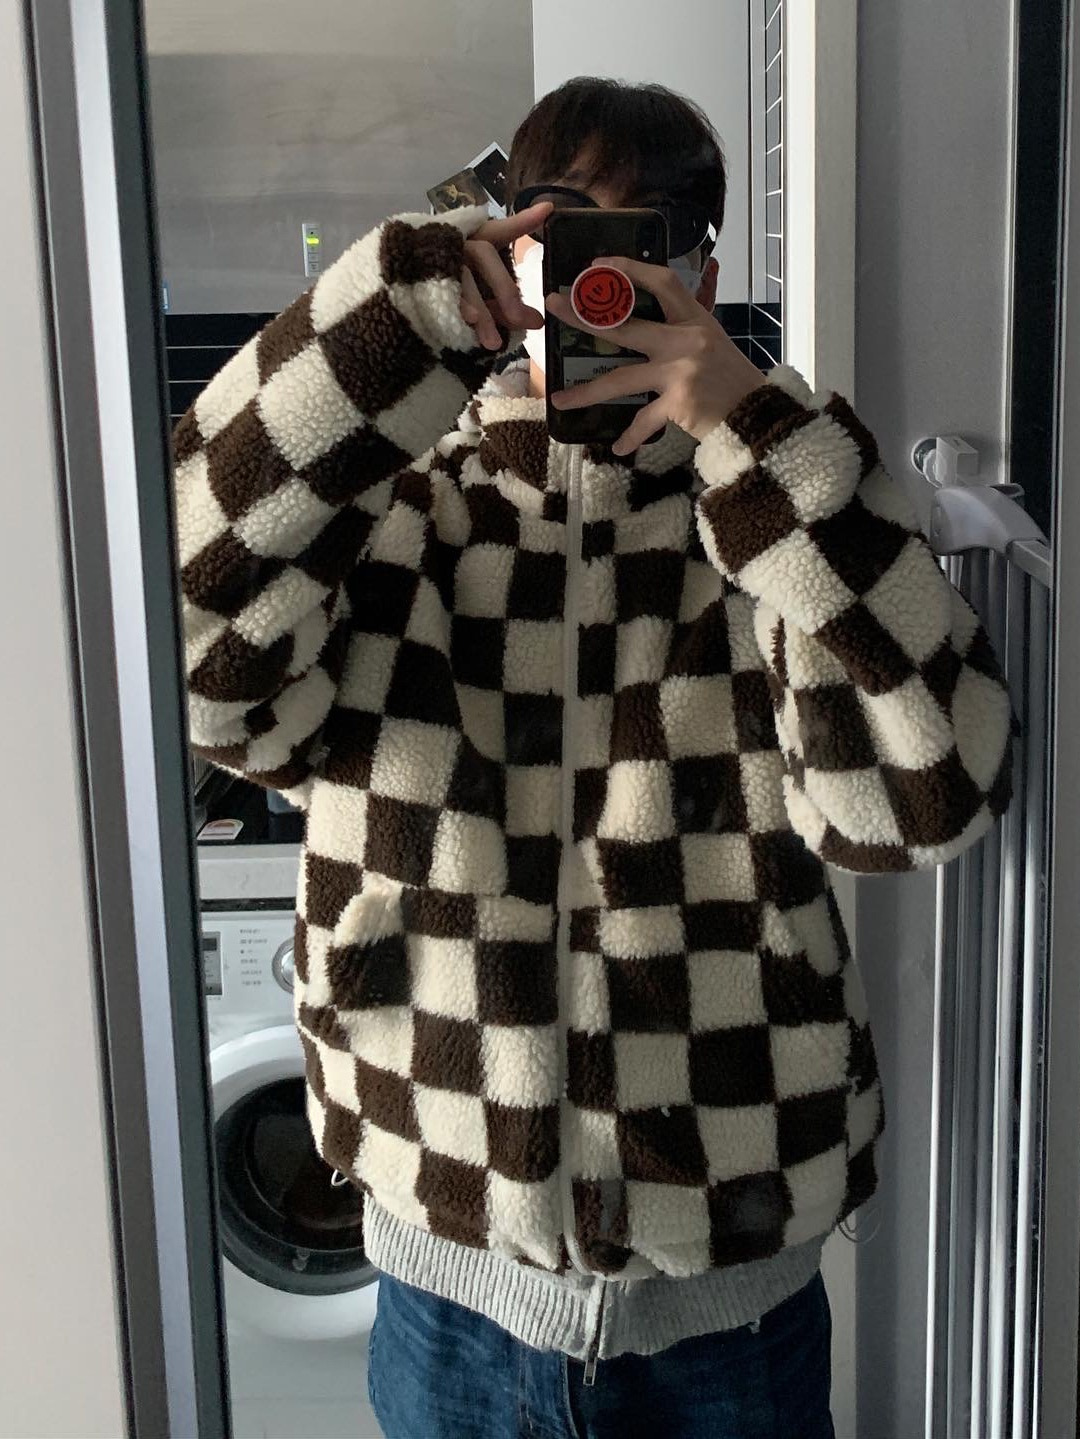 Rn checker board fleece jumper